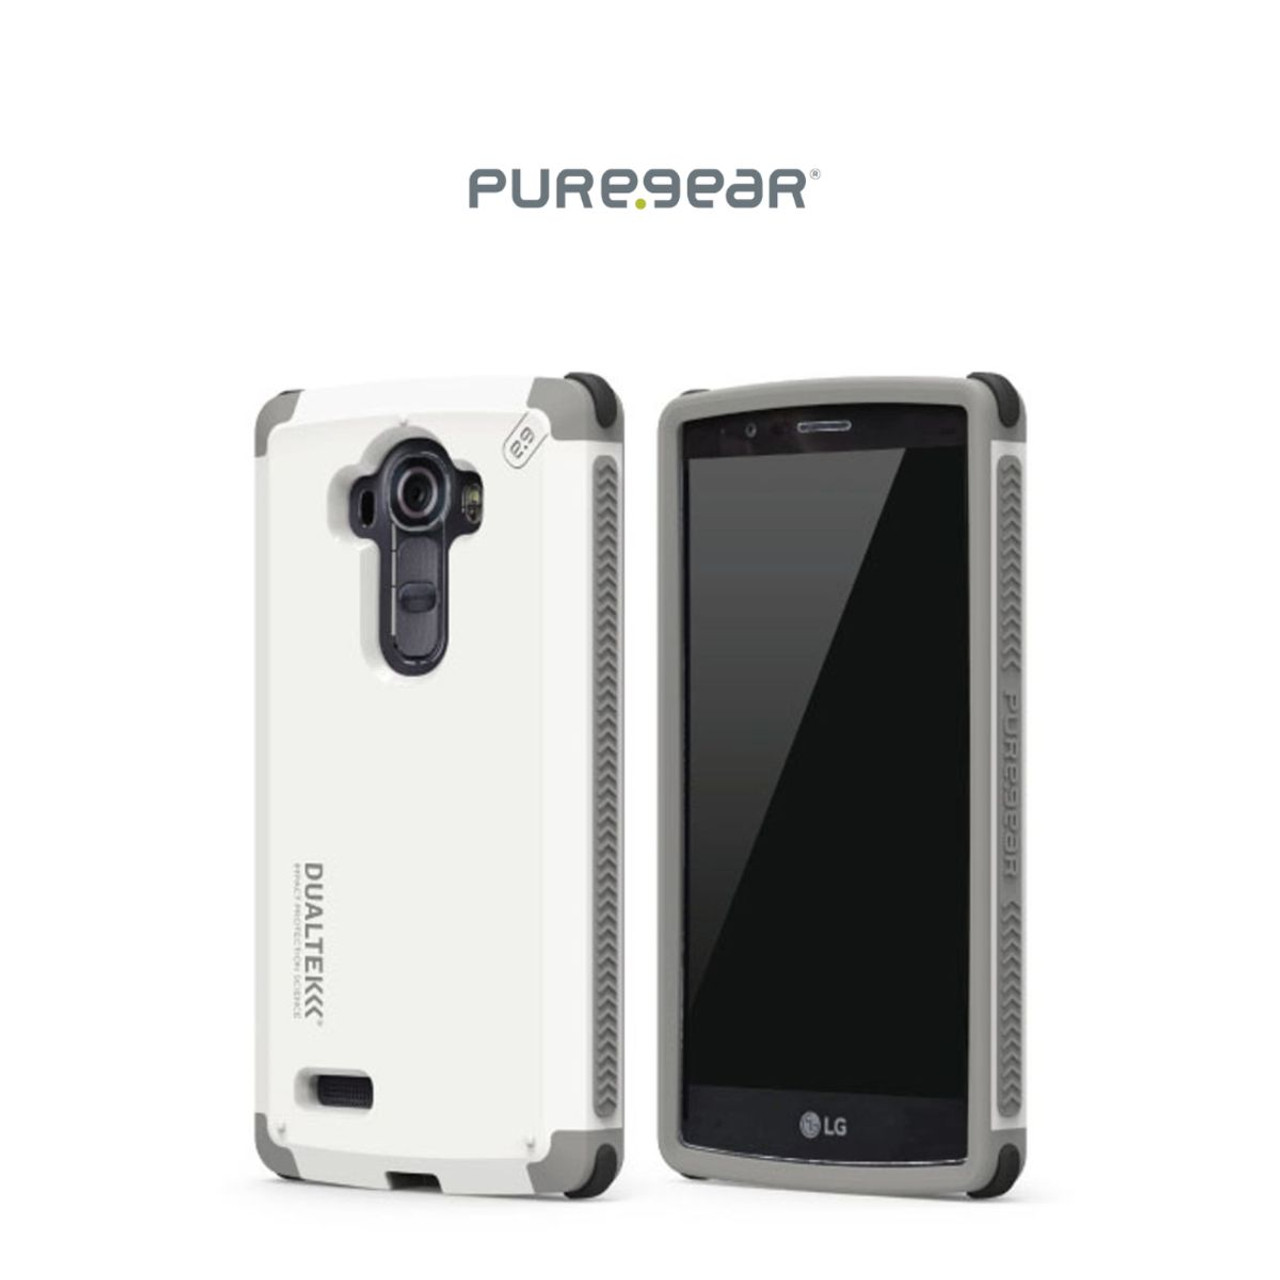 PureGear DualTek Durable Case Cover for LG G4 product image